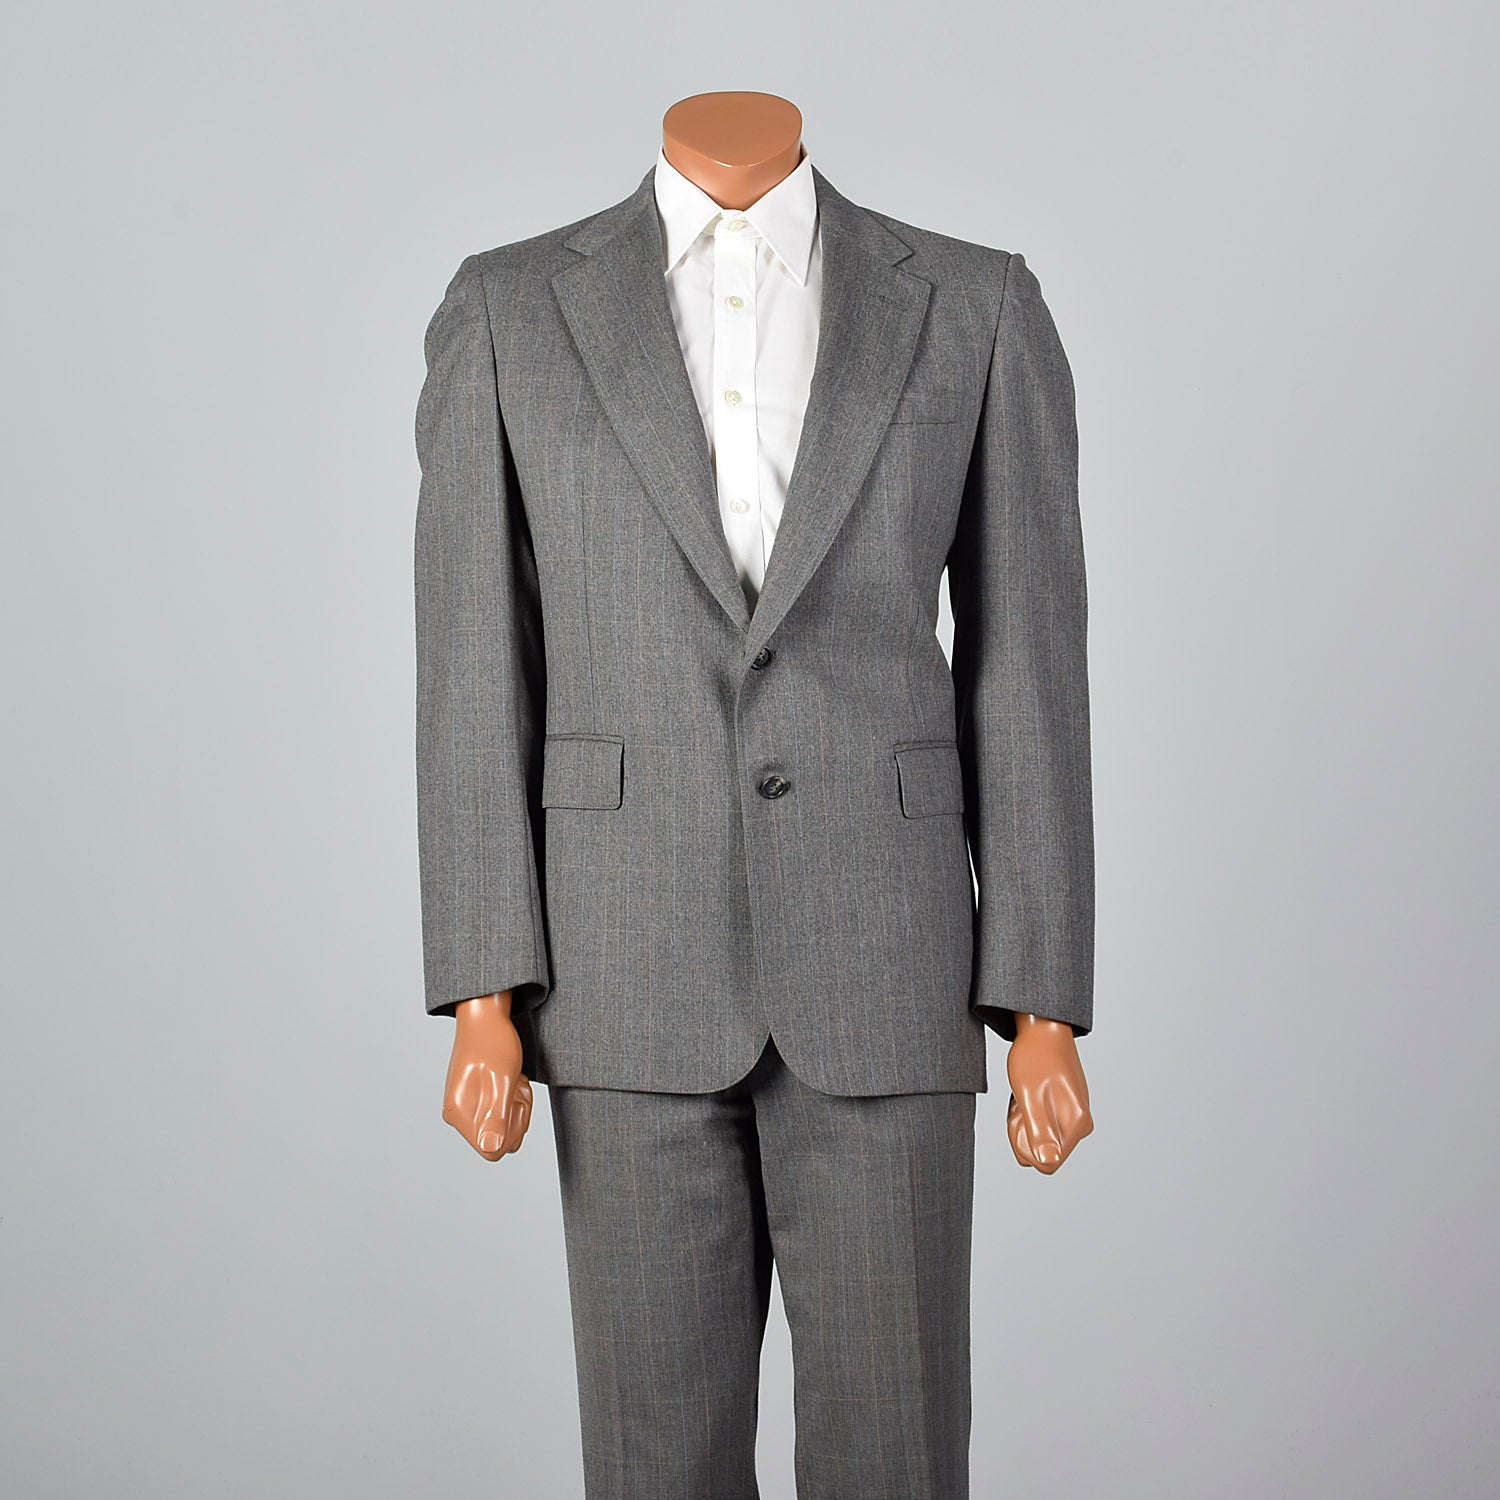 Medium 1970s Gray Windowpane Plaid Suit